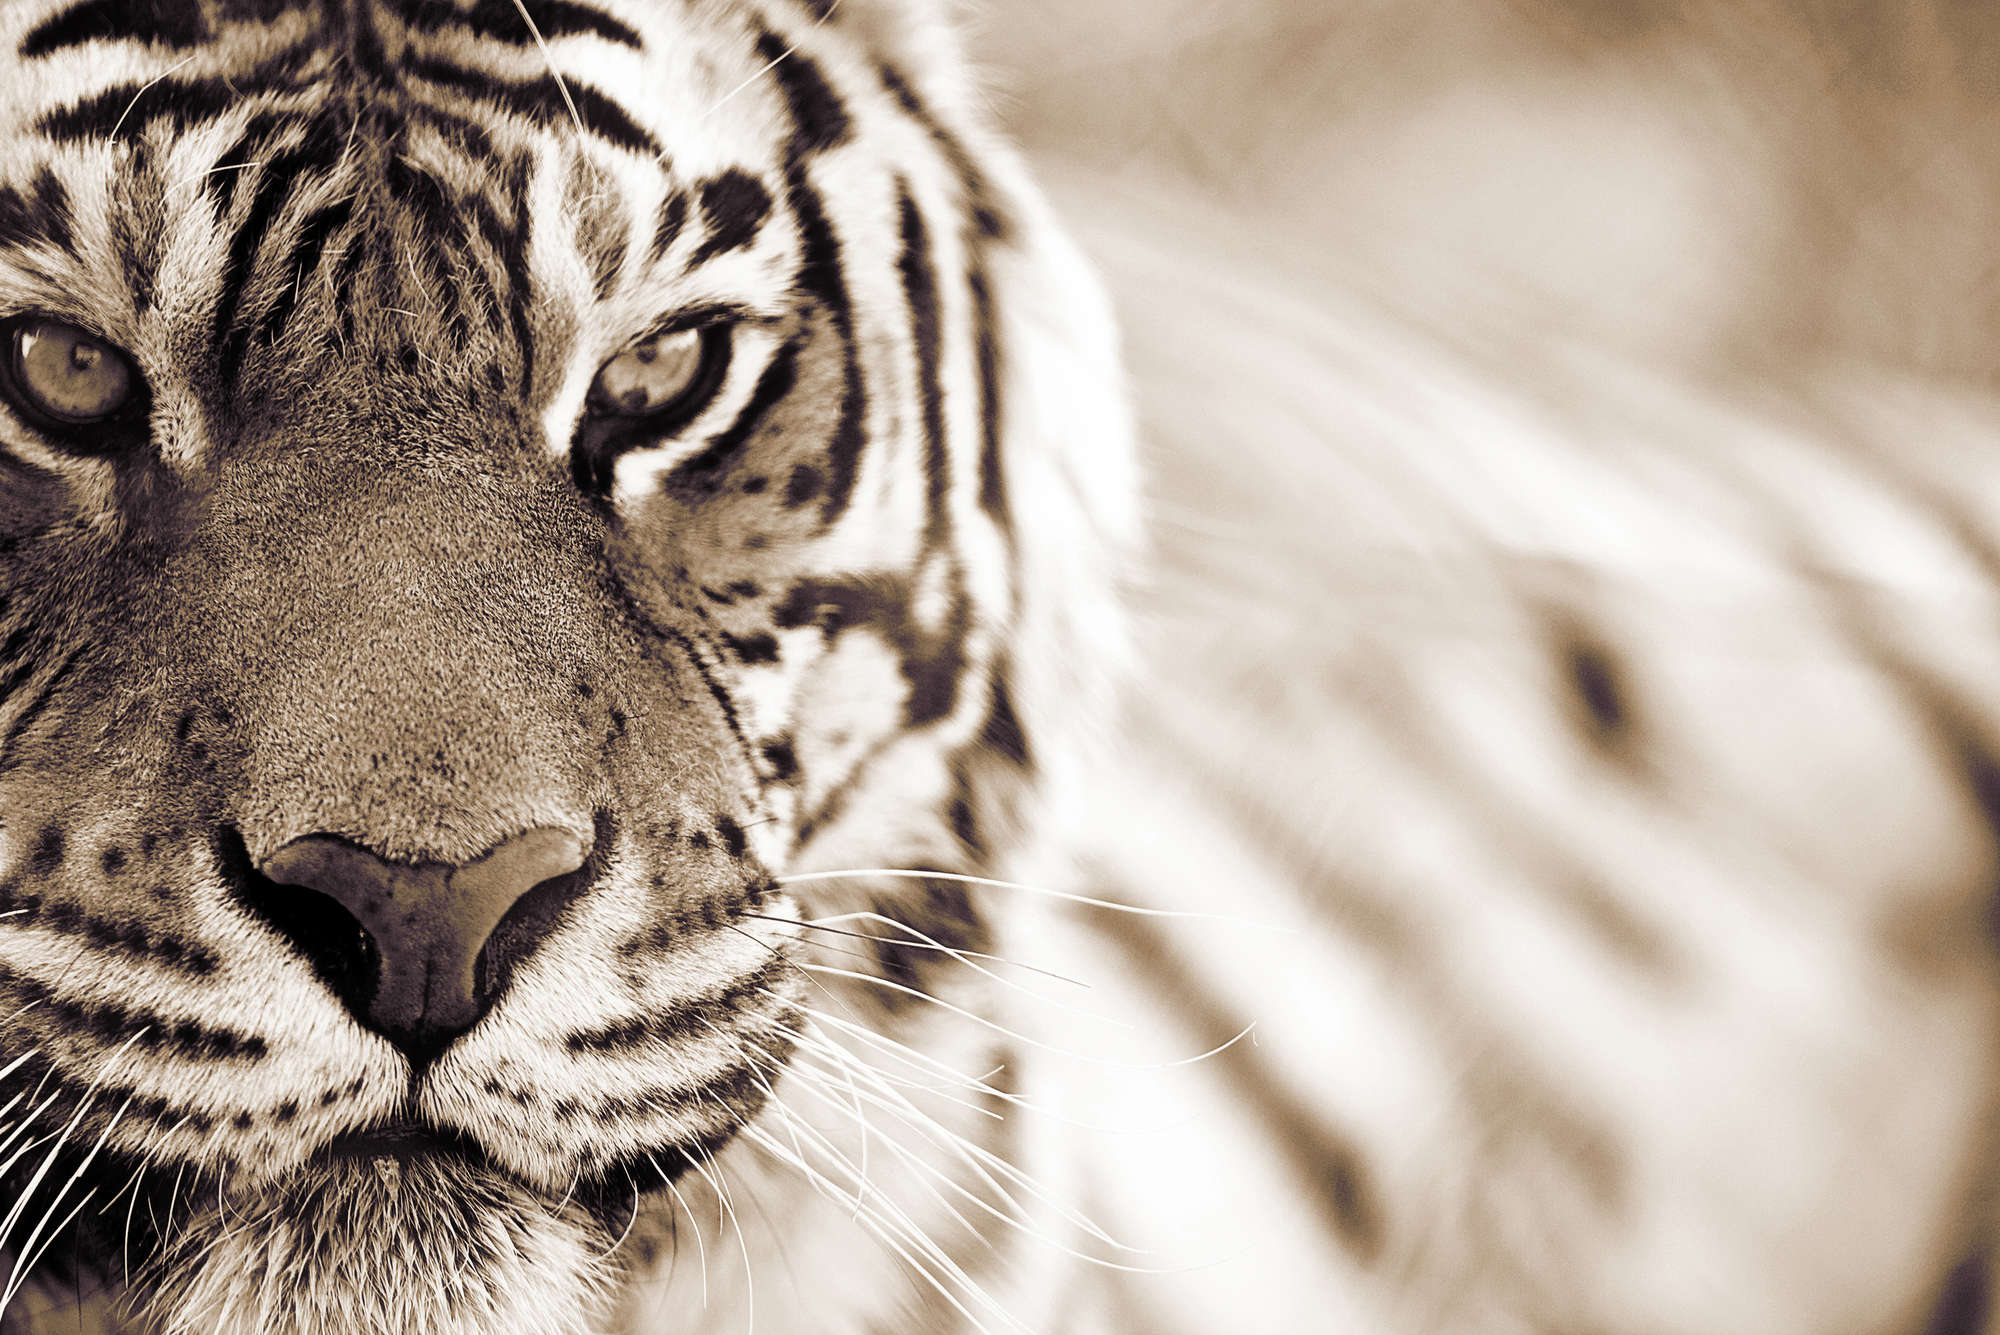             Dierenbehang Close-up van tijger - parelmoer glad vlies
        